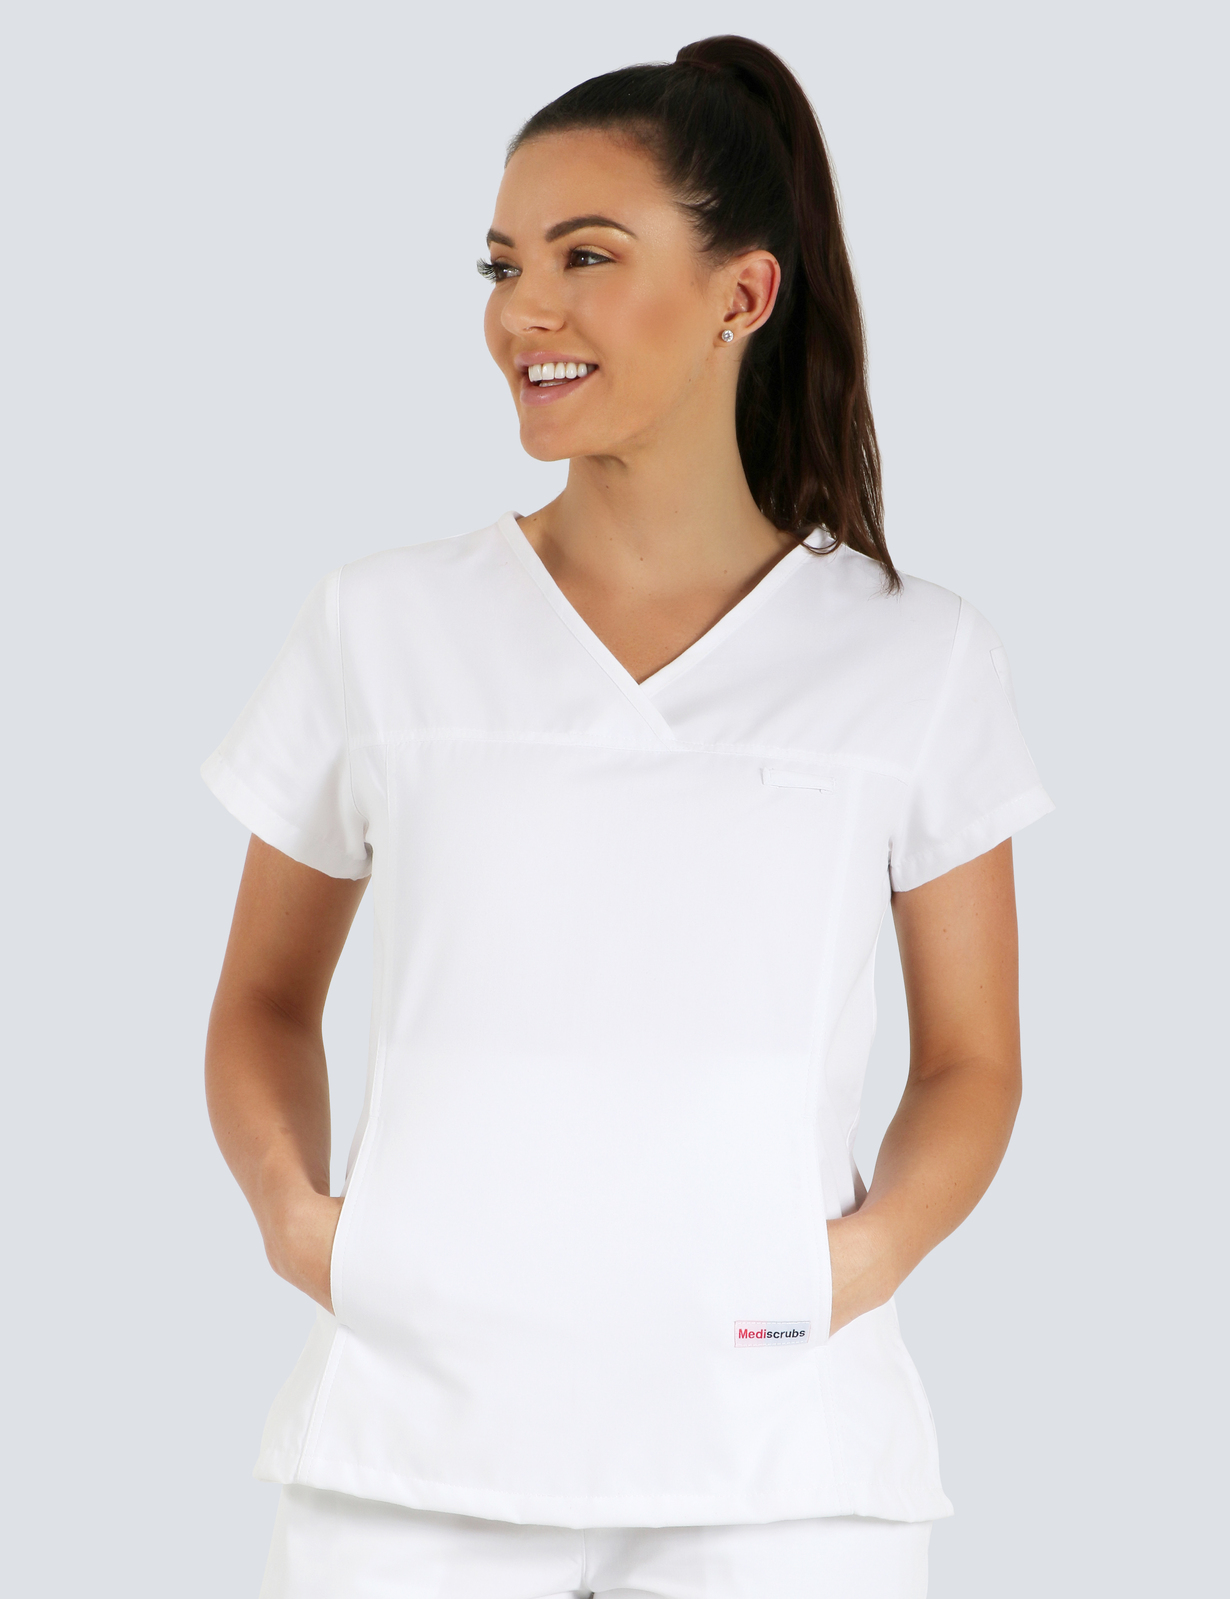 Queensland Children's Hospital Emergency Department Assistant in Nursing  Uniform Top Bundle  (Women's Fit Top in White incl Logos)